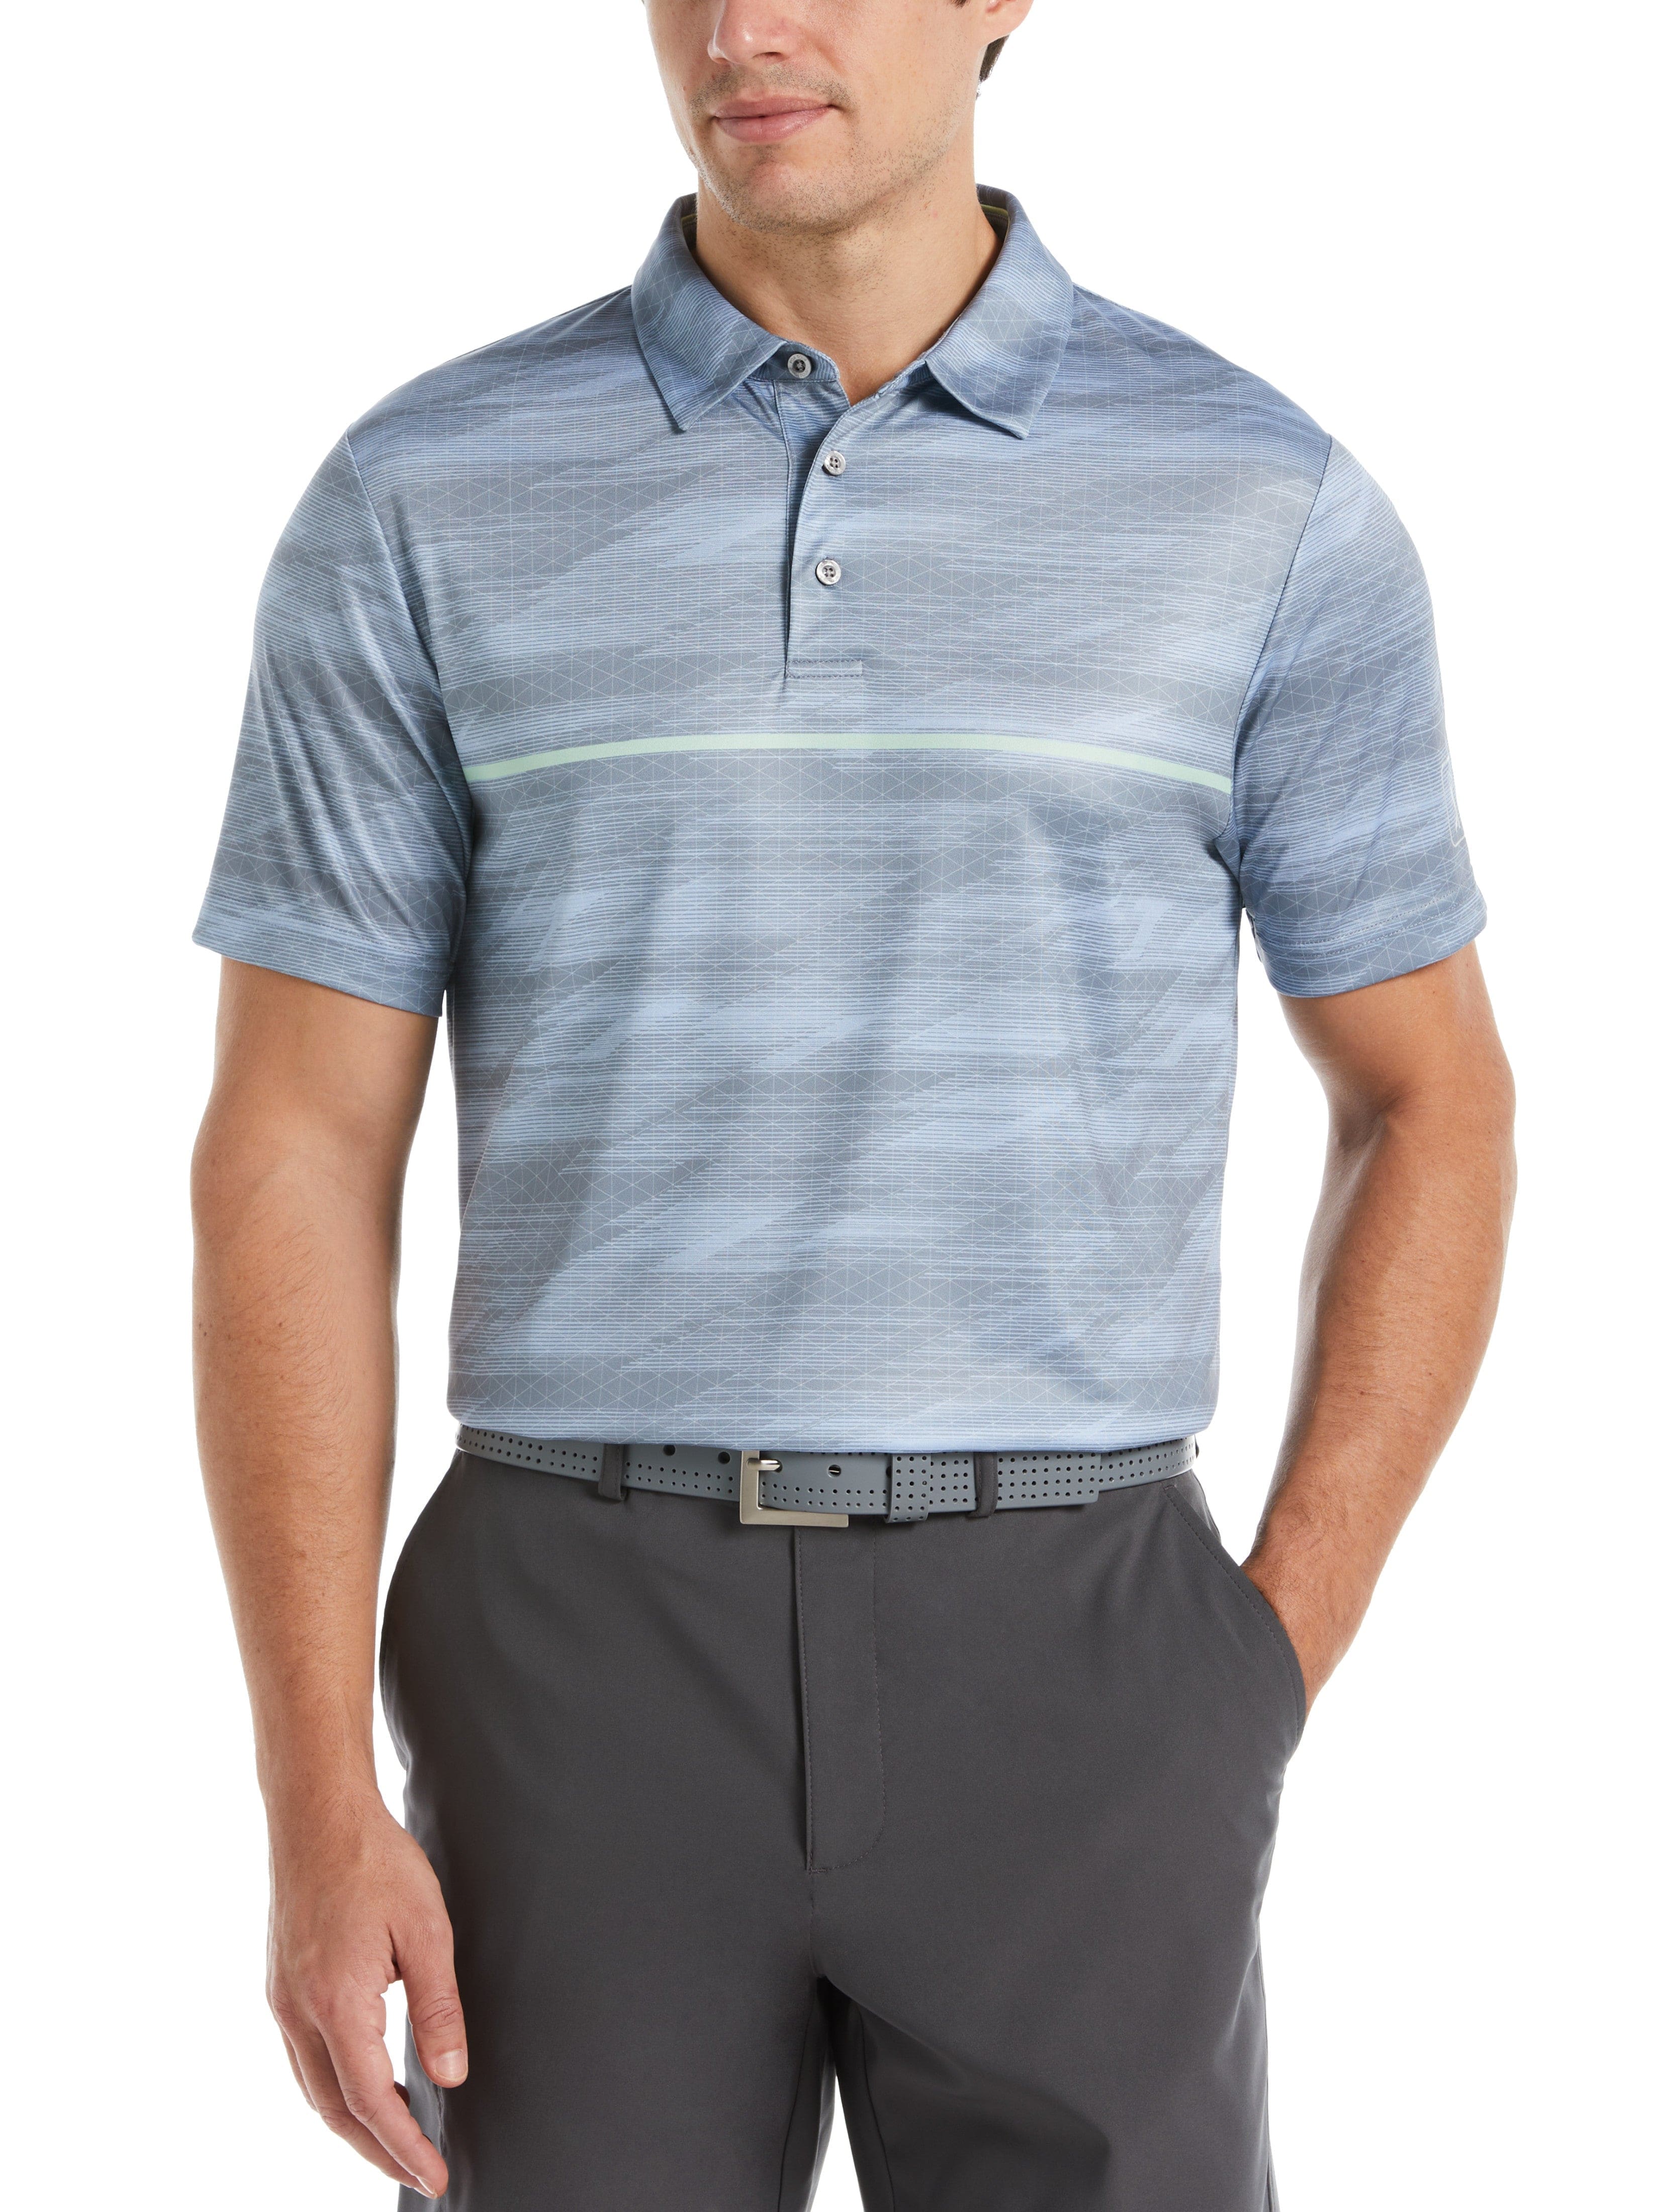 PGA TOUR Apparel Mens Digitized Chest Stripe Print Golf Polo Shirt, Size Small, Tradewinds Gray, 100% Polyester | Golf Apparel Shop